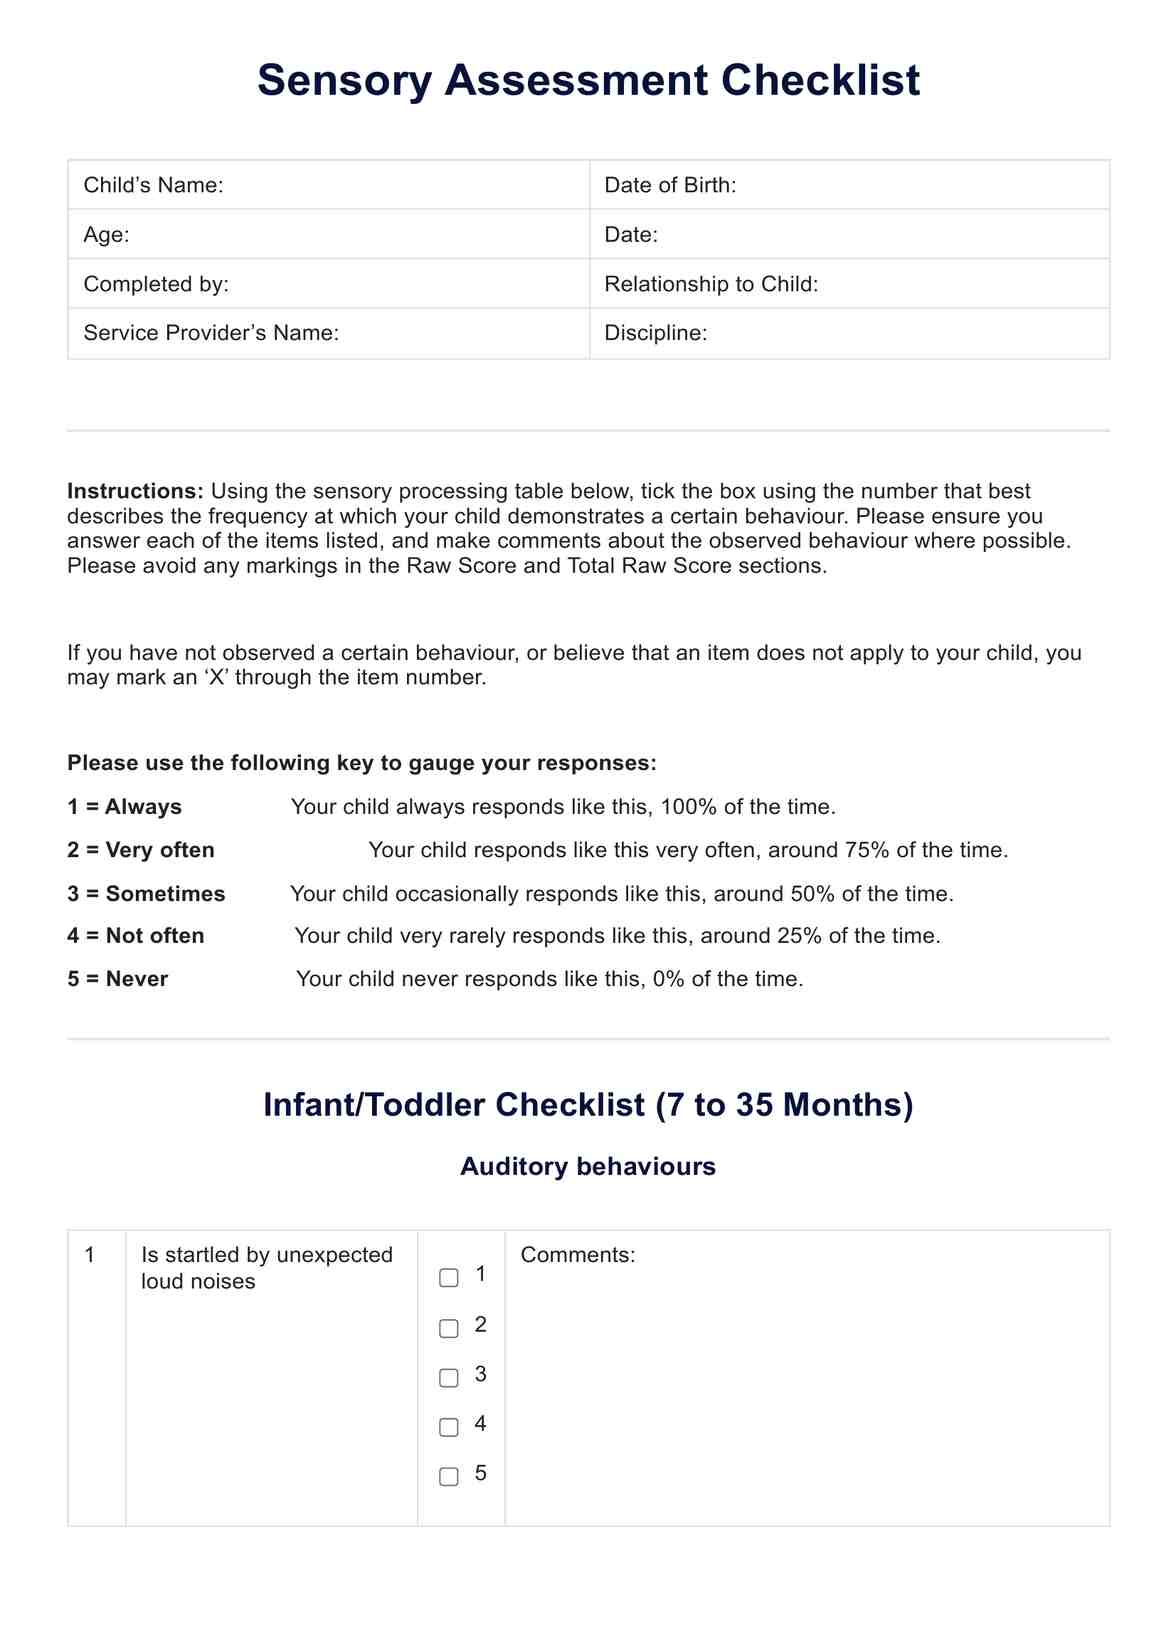 Sensory Assessment Checklist PDF Example